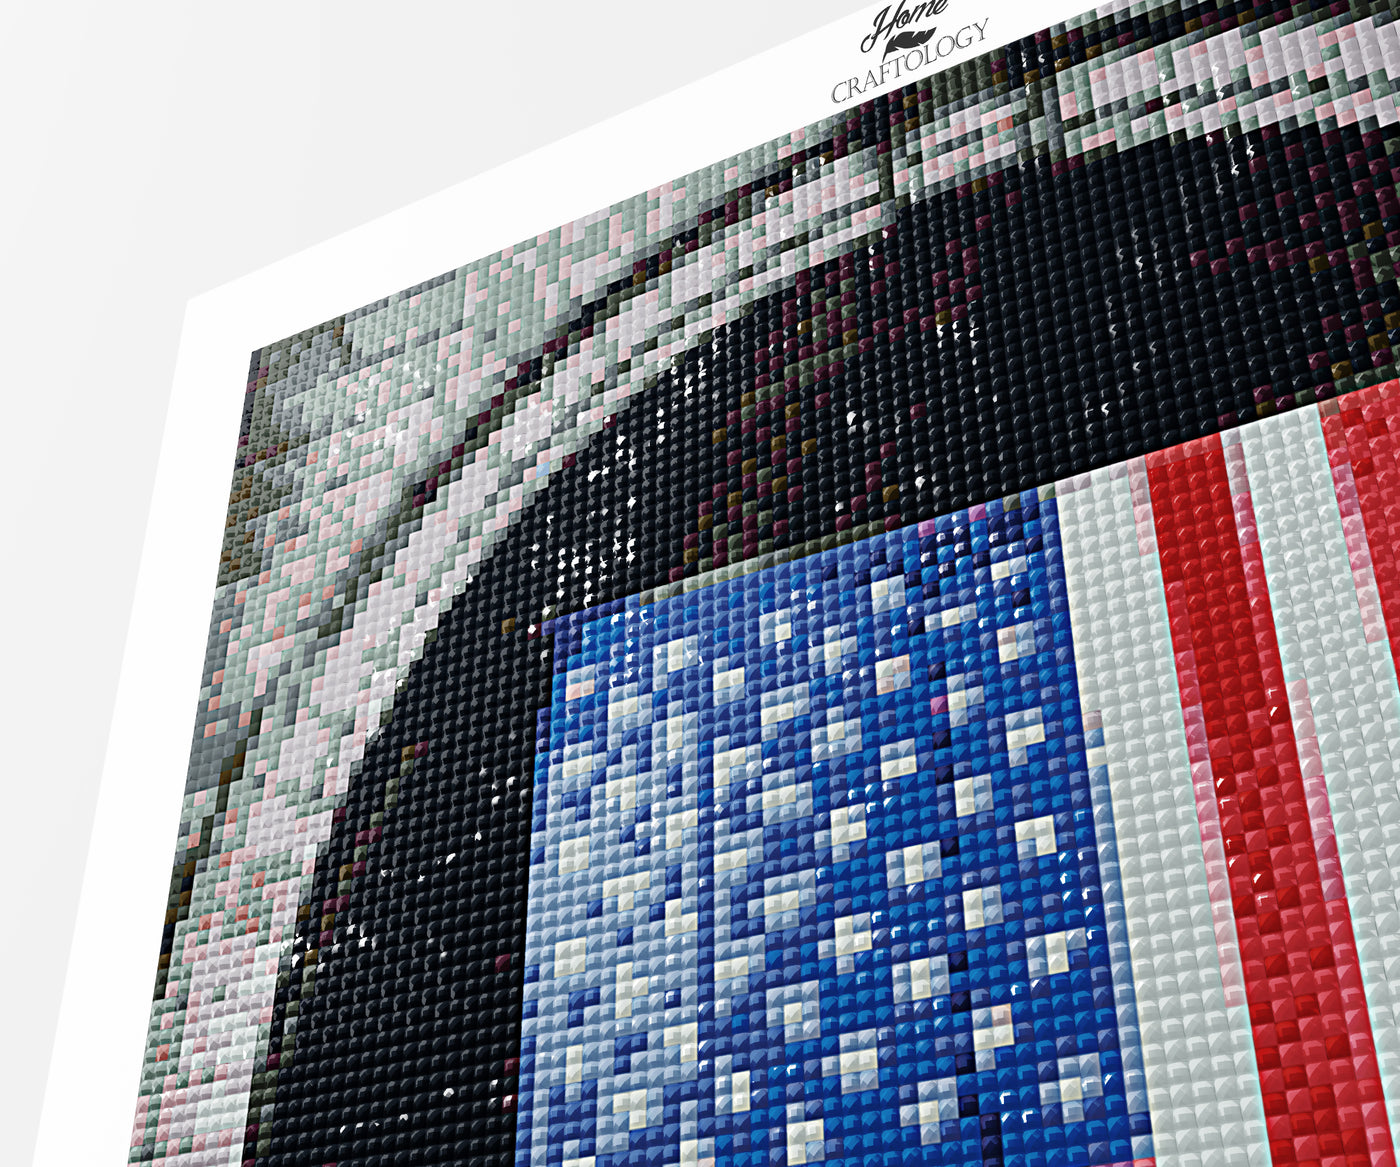 Hanging USA Flag - Premium Diamond Painting Kit